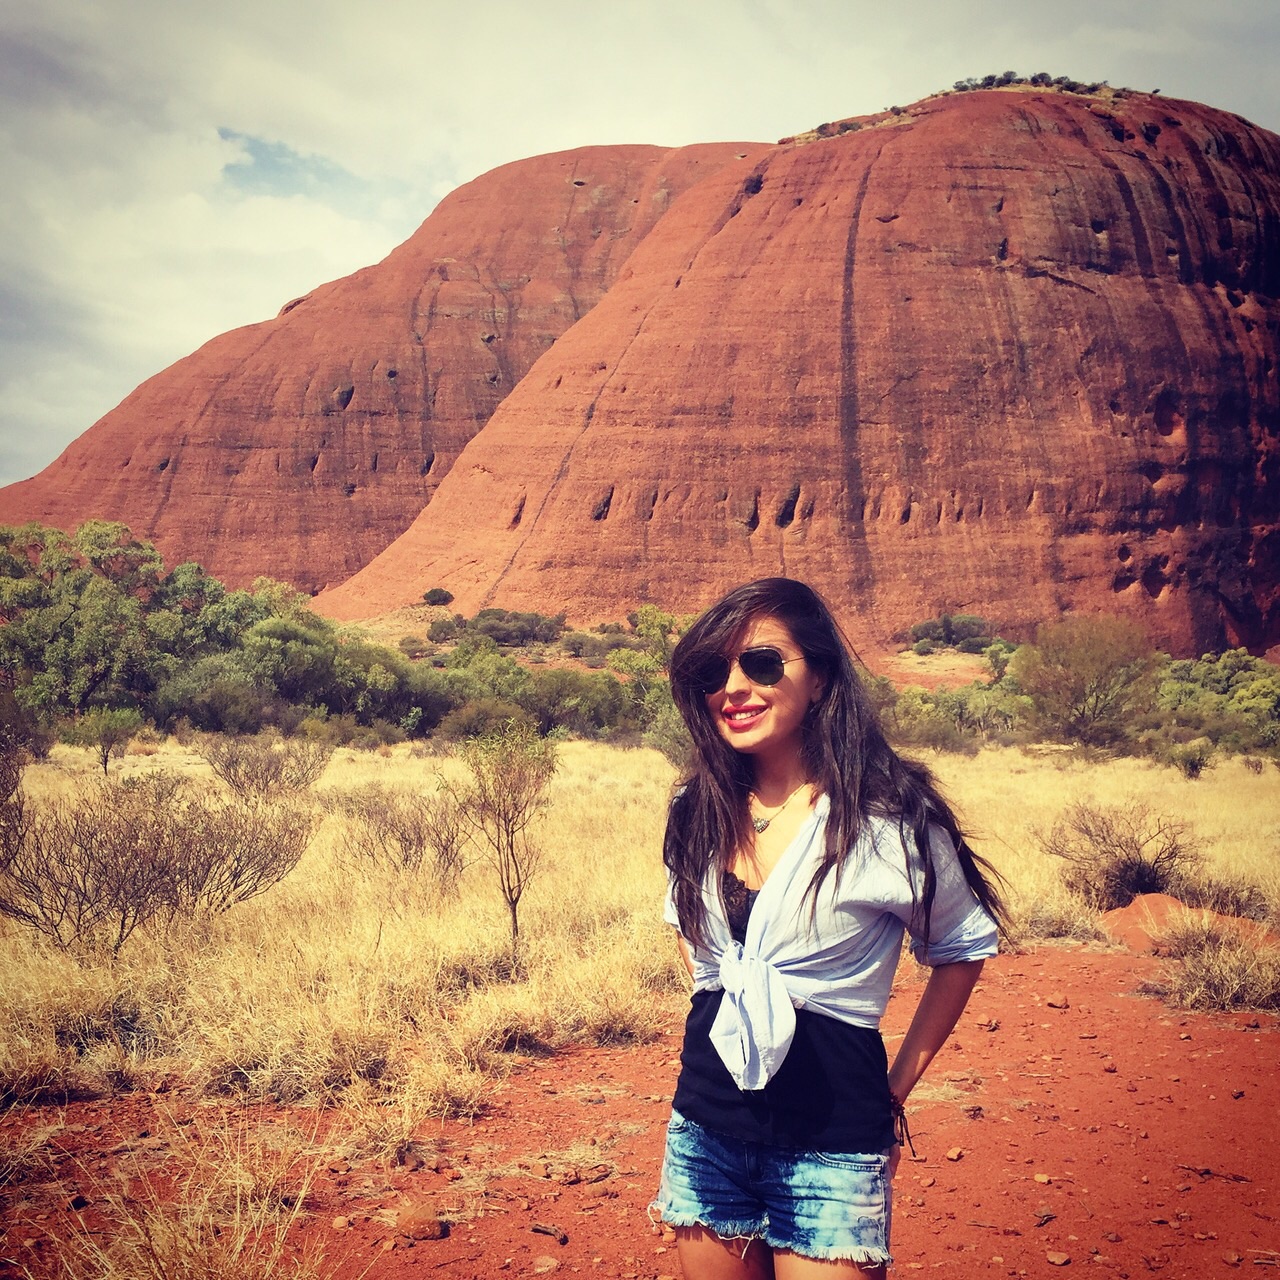 Leyla Aliyeva studies Australia’s environment protection experience